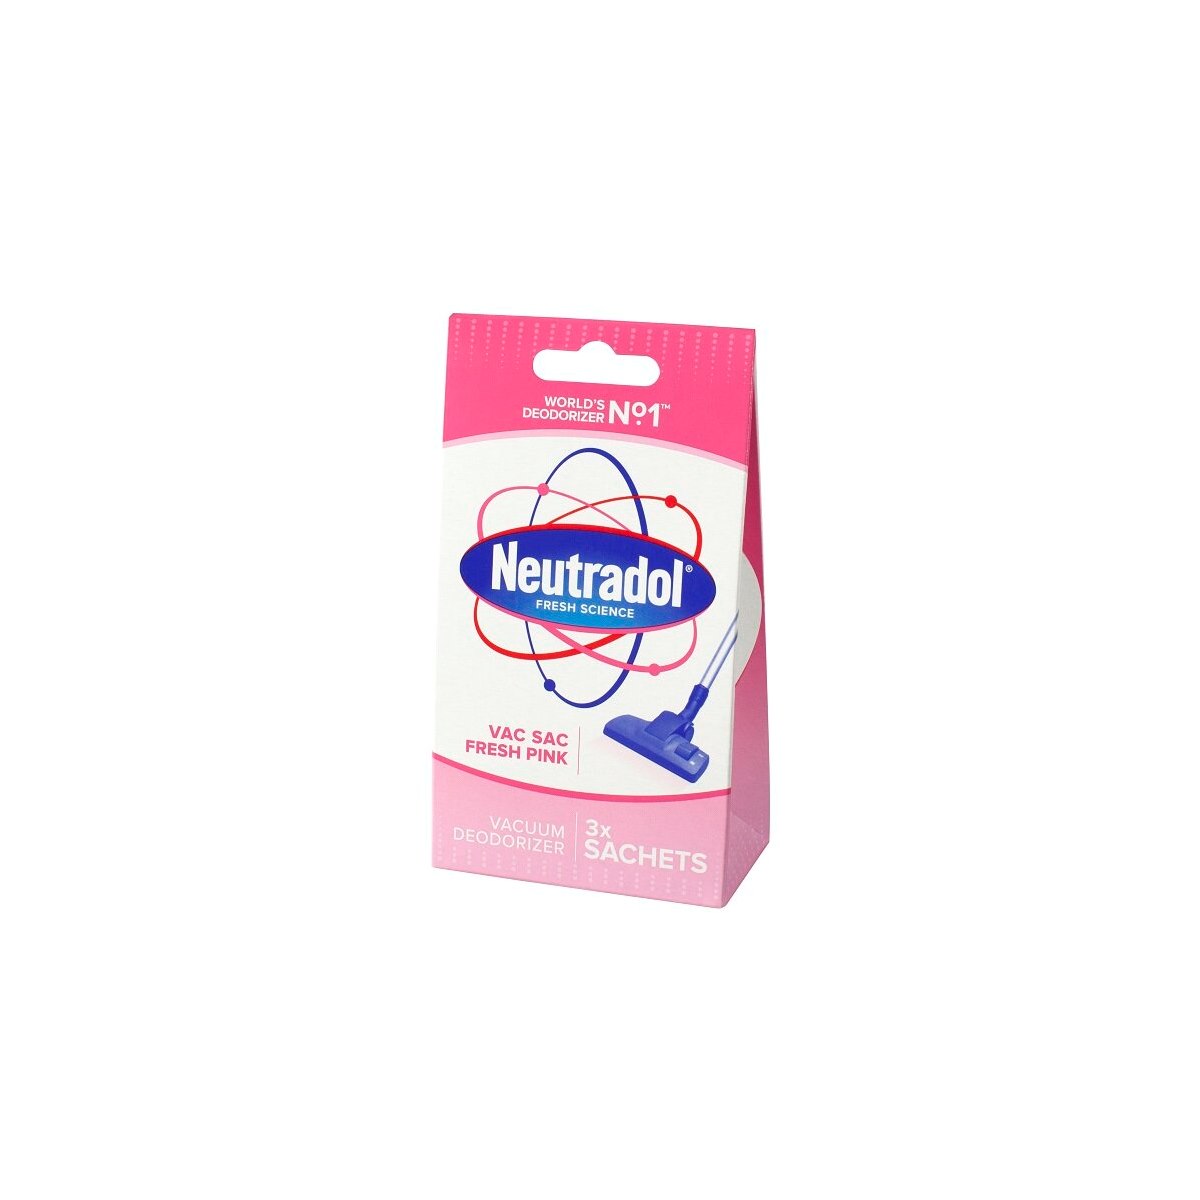 Neutradol Fresh Pink Vac Sac Deodorizer 3 Sachets